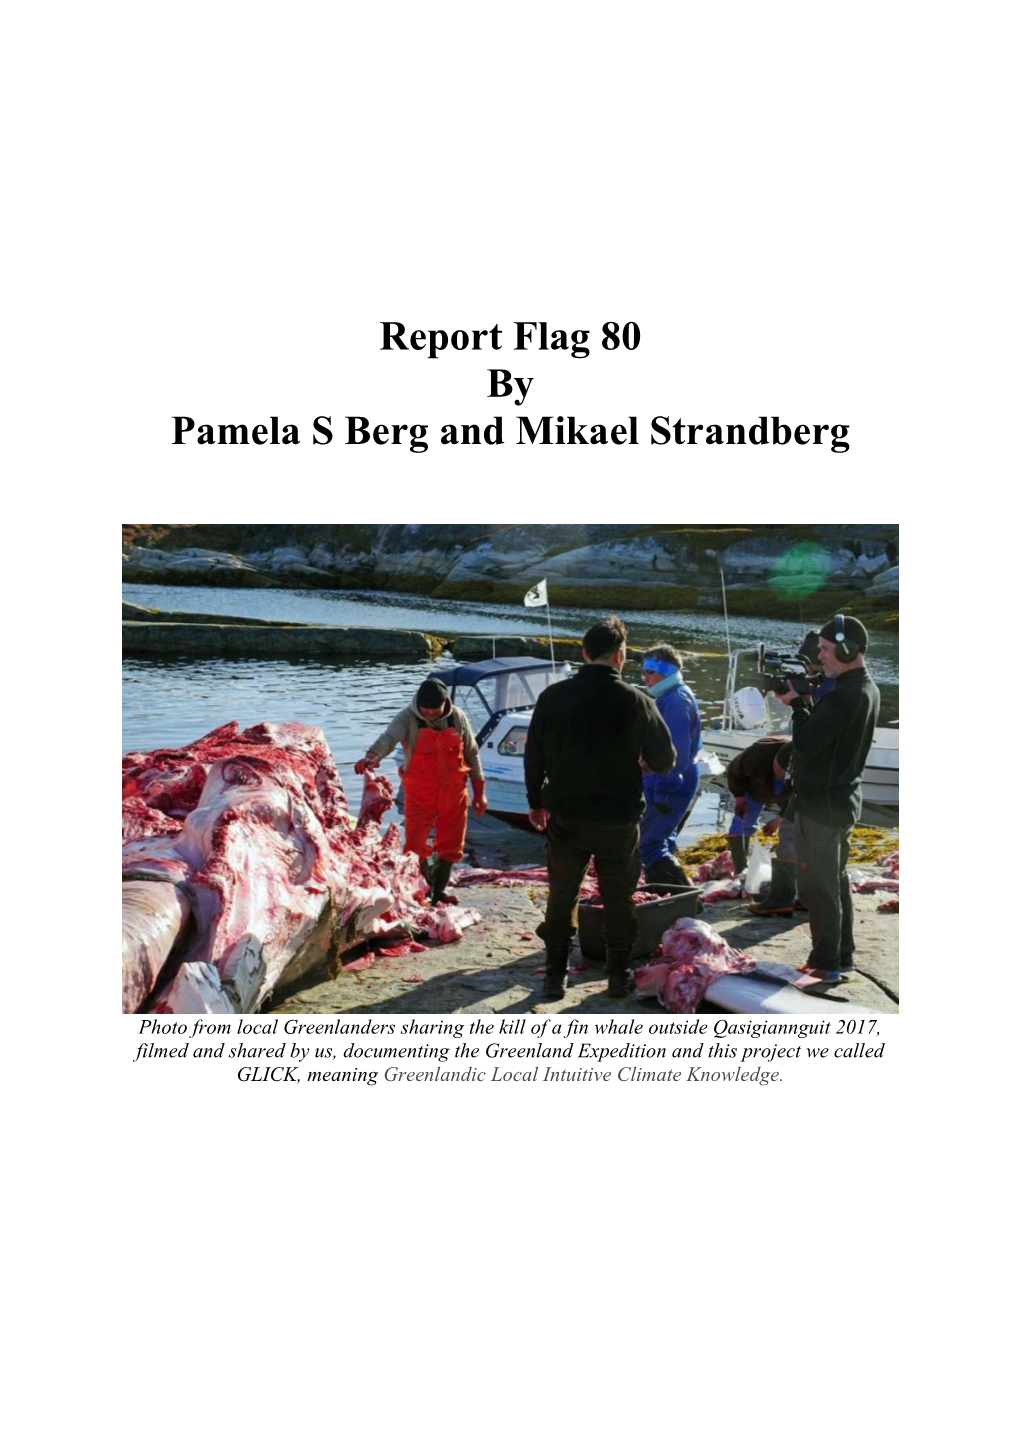 Report Flag 80 by Pamela S Berg and Mikael Strandberg